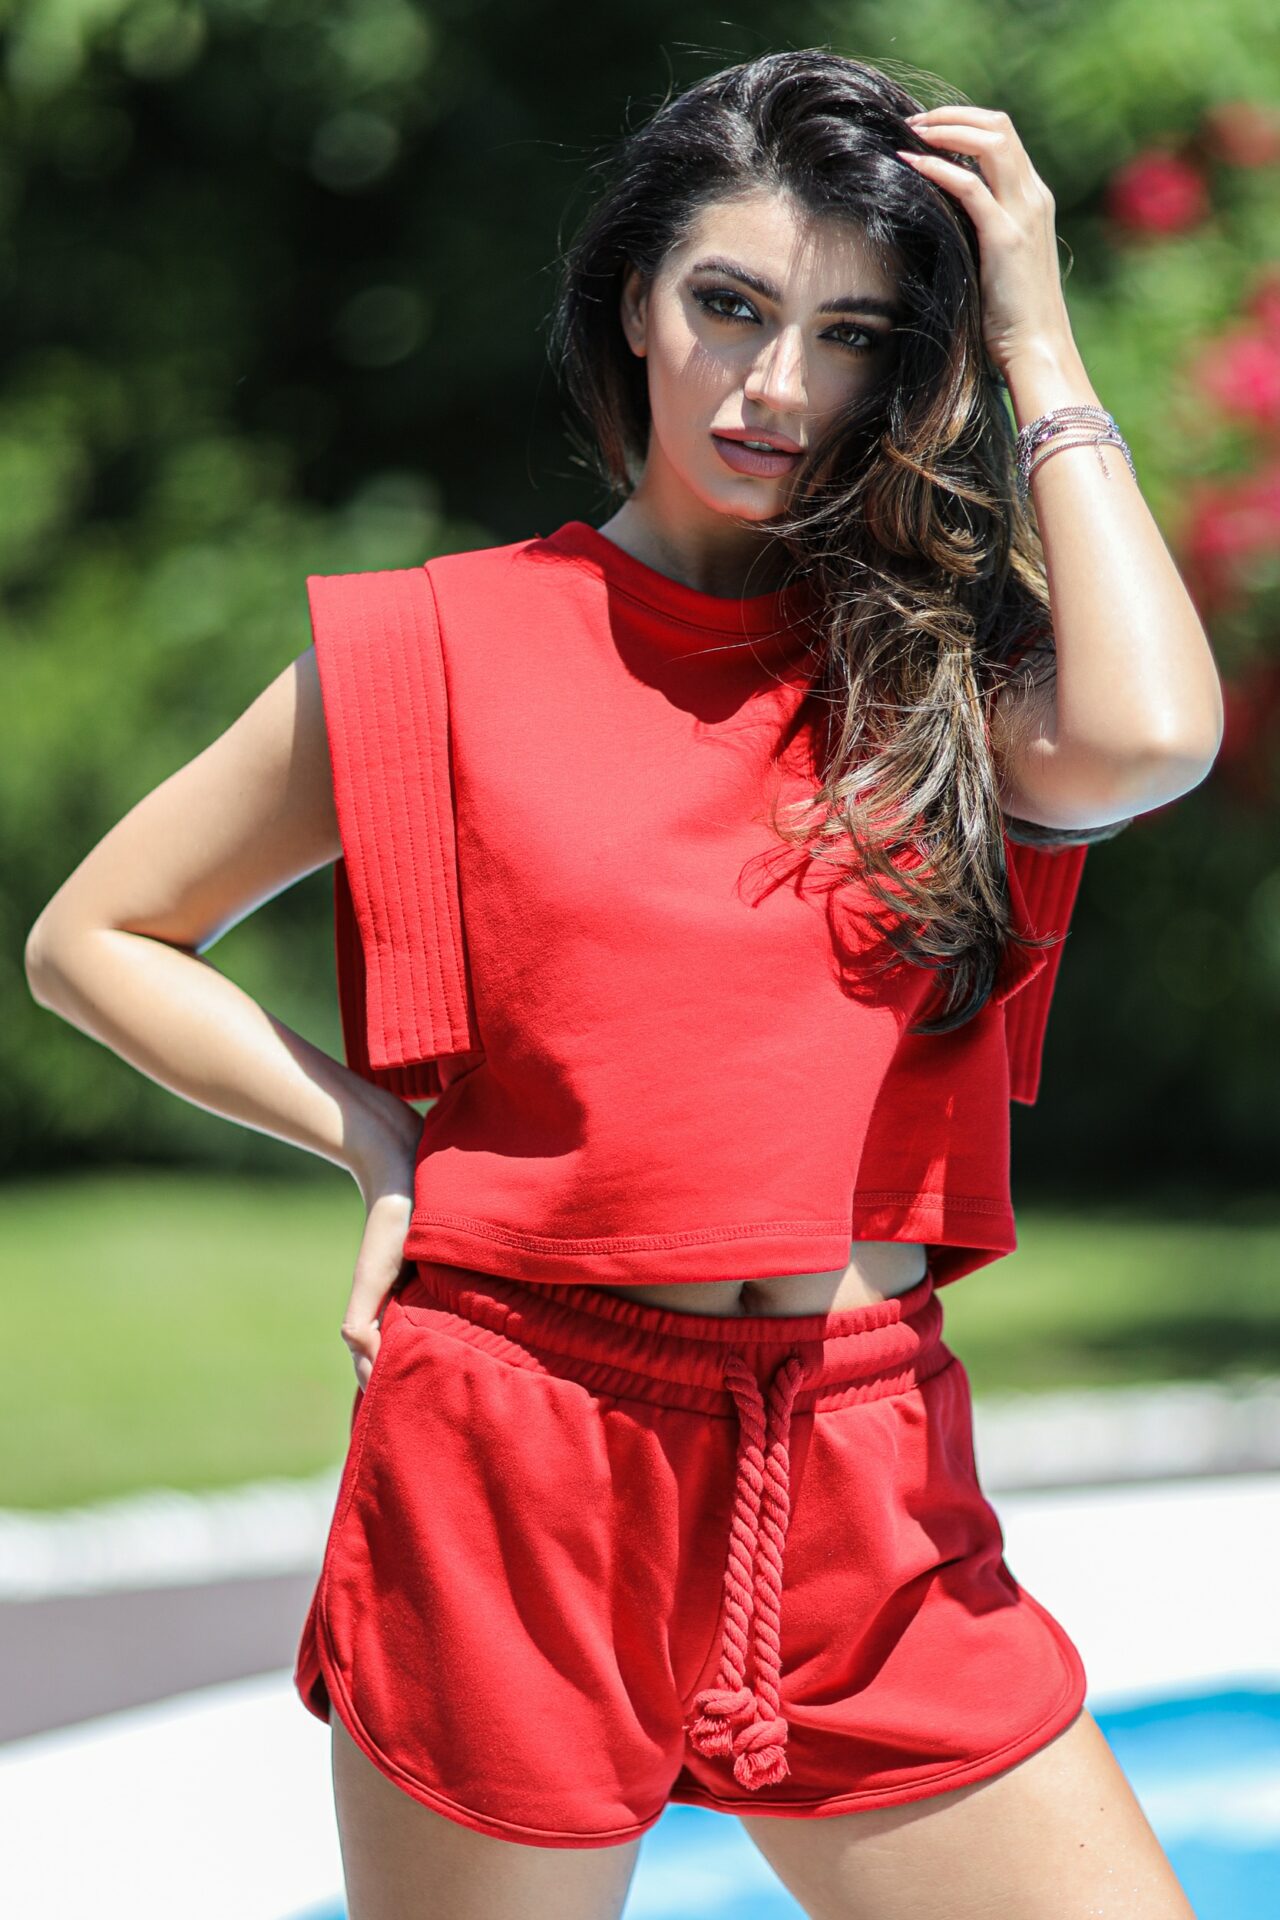 TRENING PANTALONI SCURTI TR48 ROSU | Fashion - Magazin online haine și rochii de